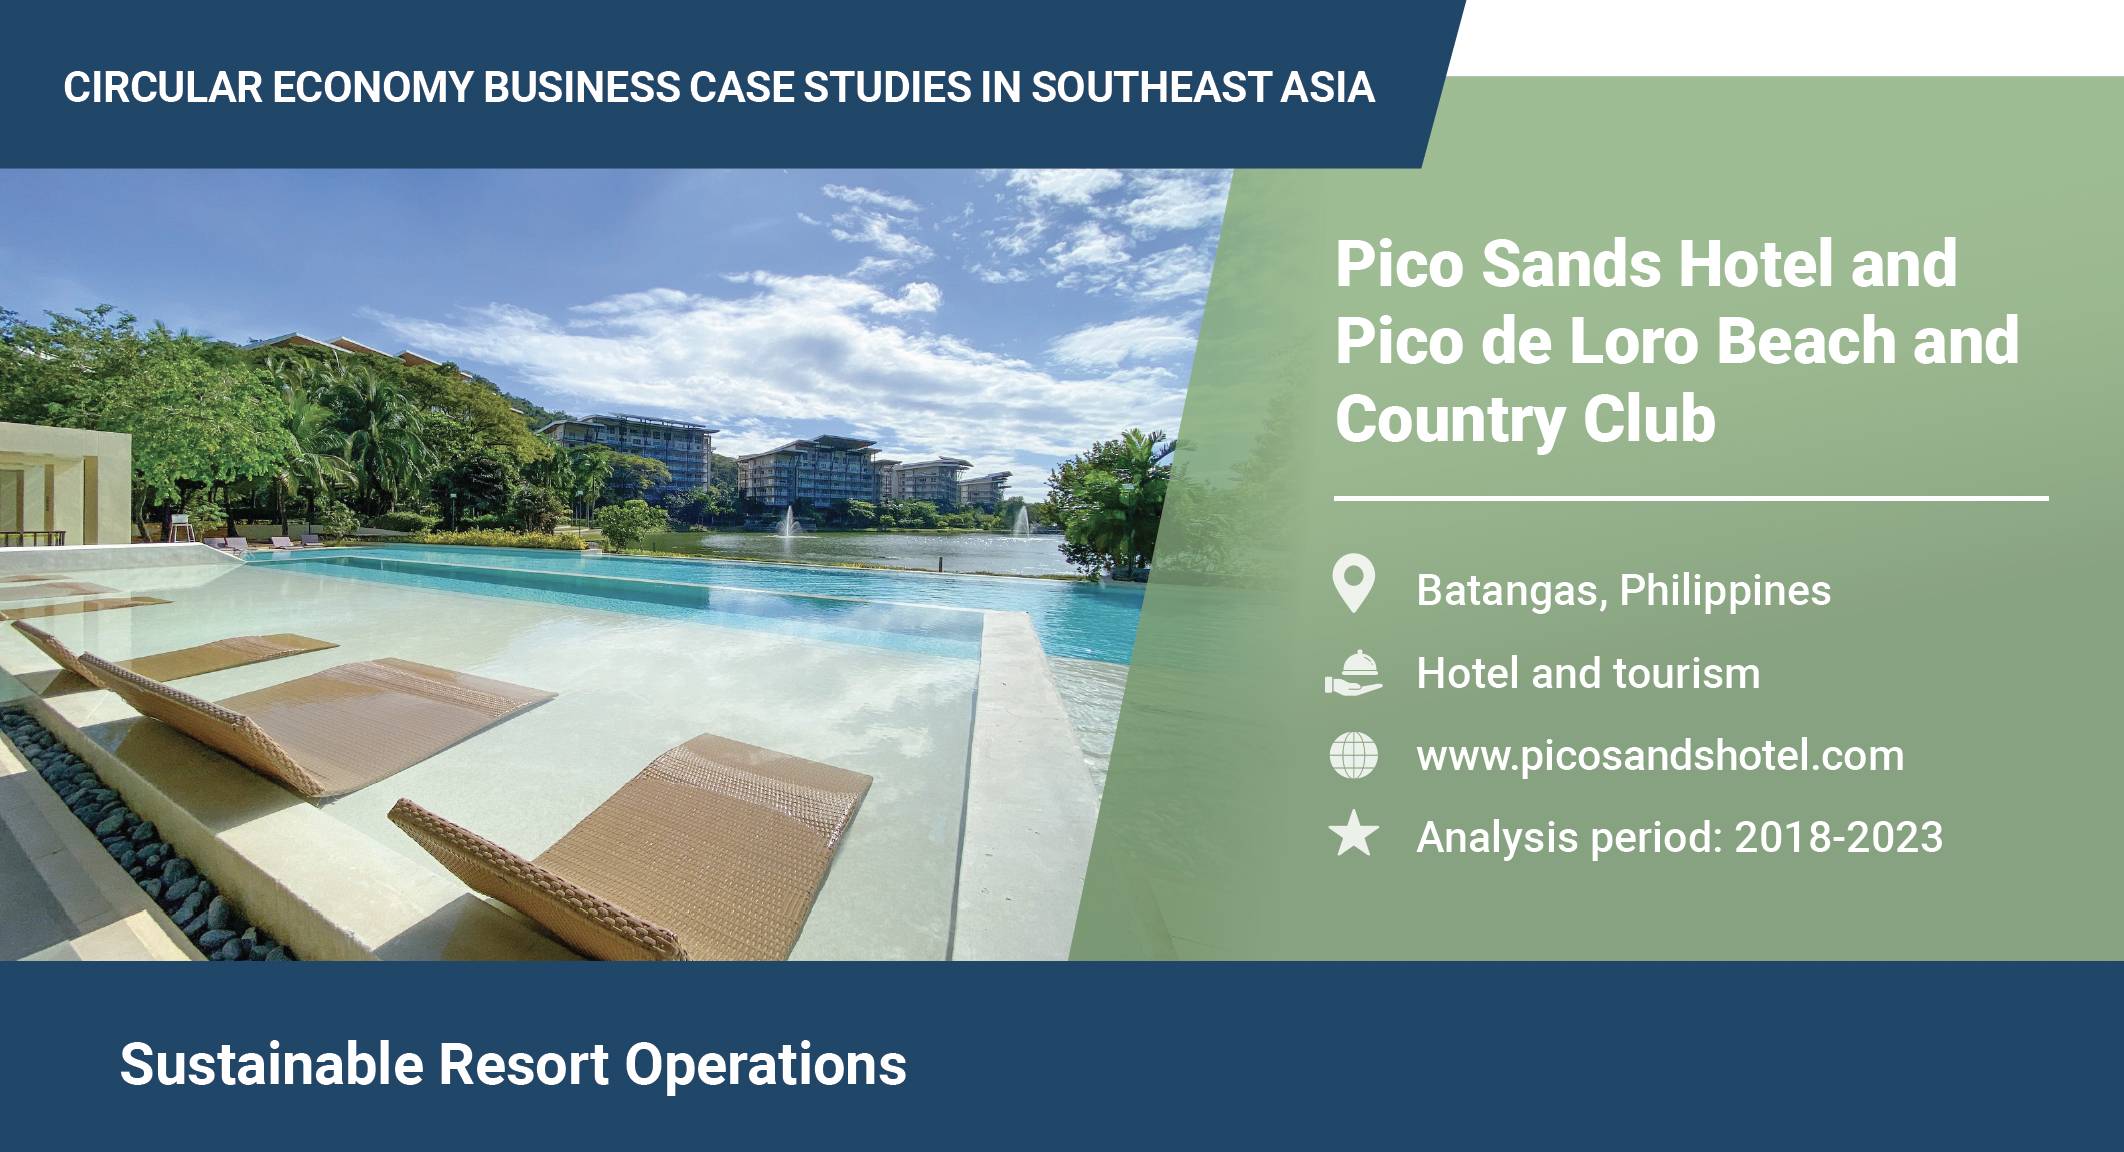 Pico Sands Hotel and Pico de Loro Beach and Country Club